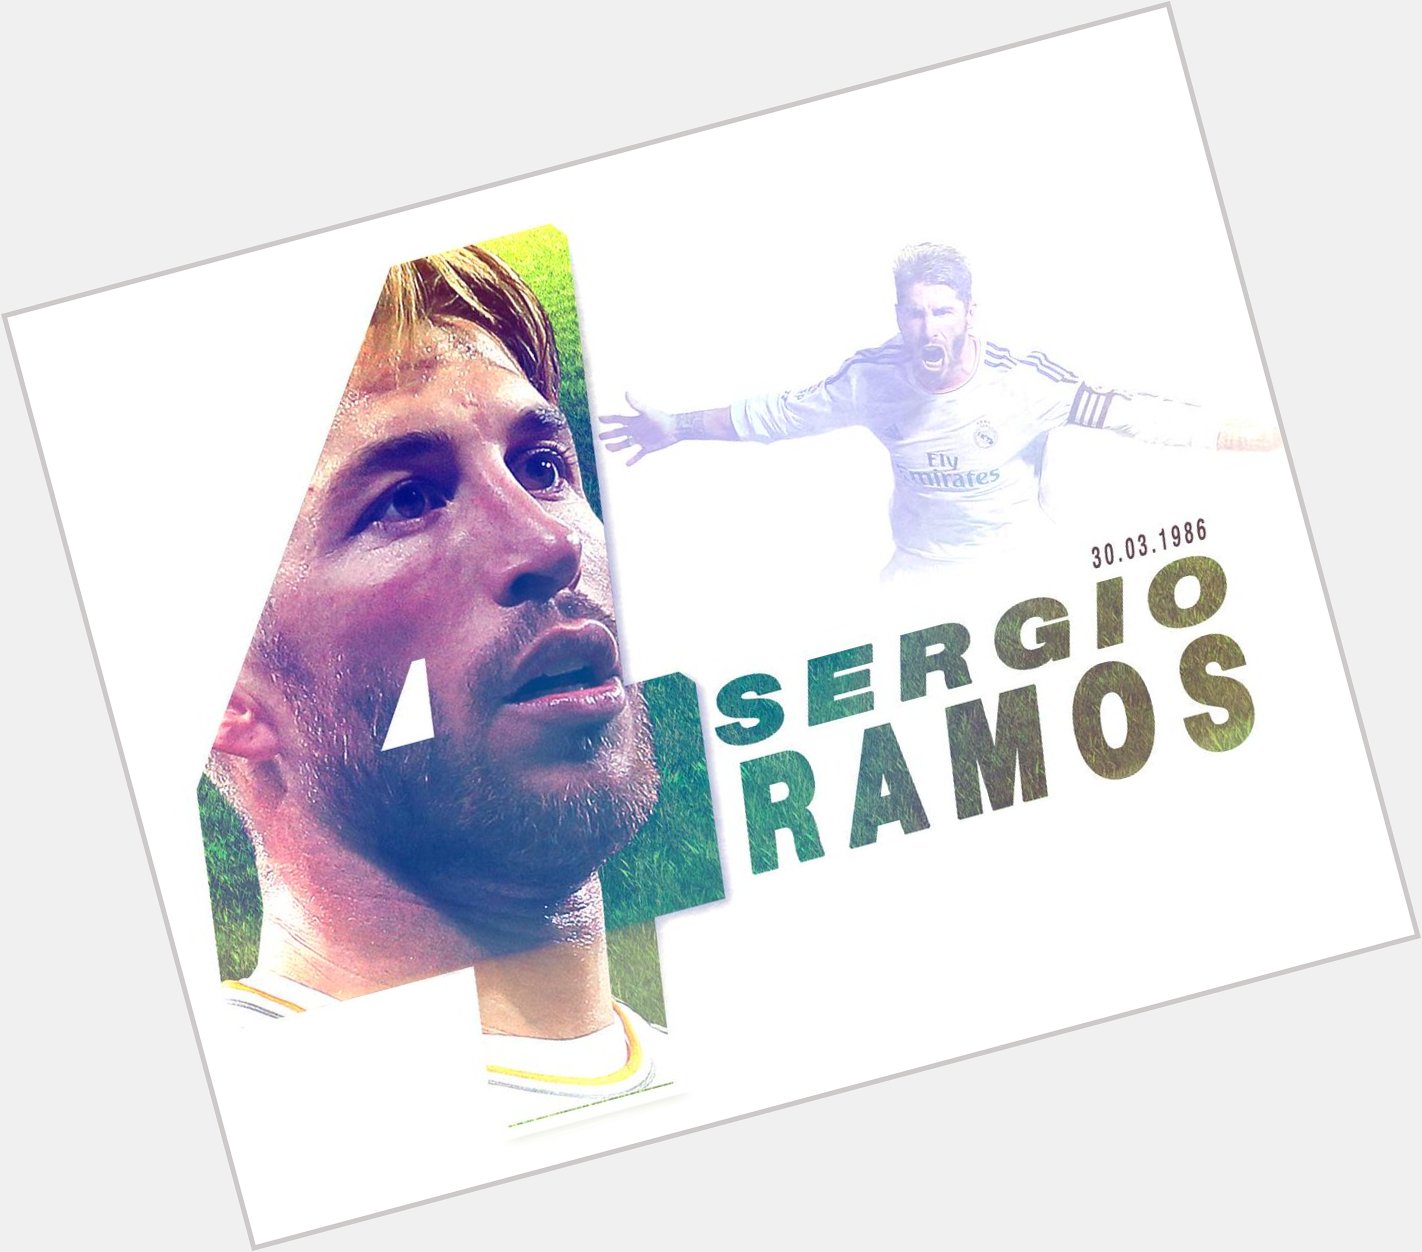 Selamat ulangtahun Sergio Ramos / happy birthday Sergio Ramos from your fans in Indonesia 